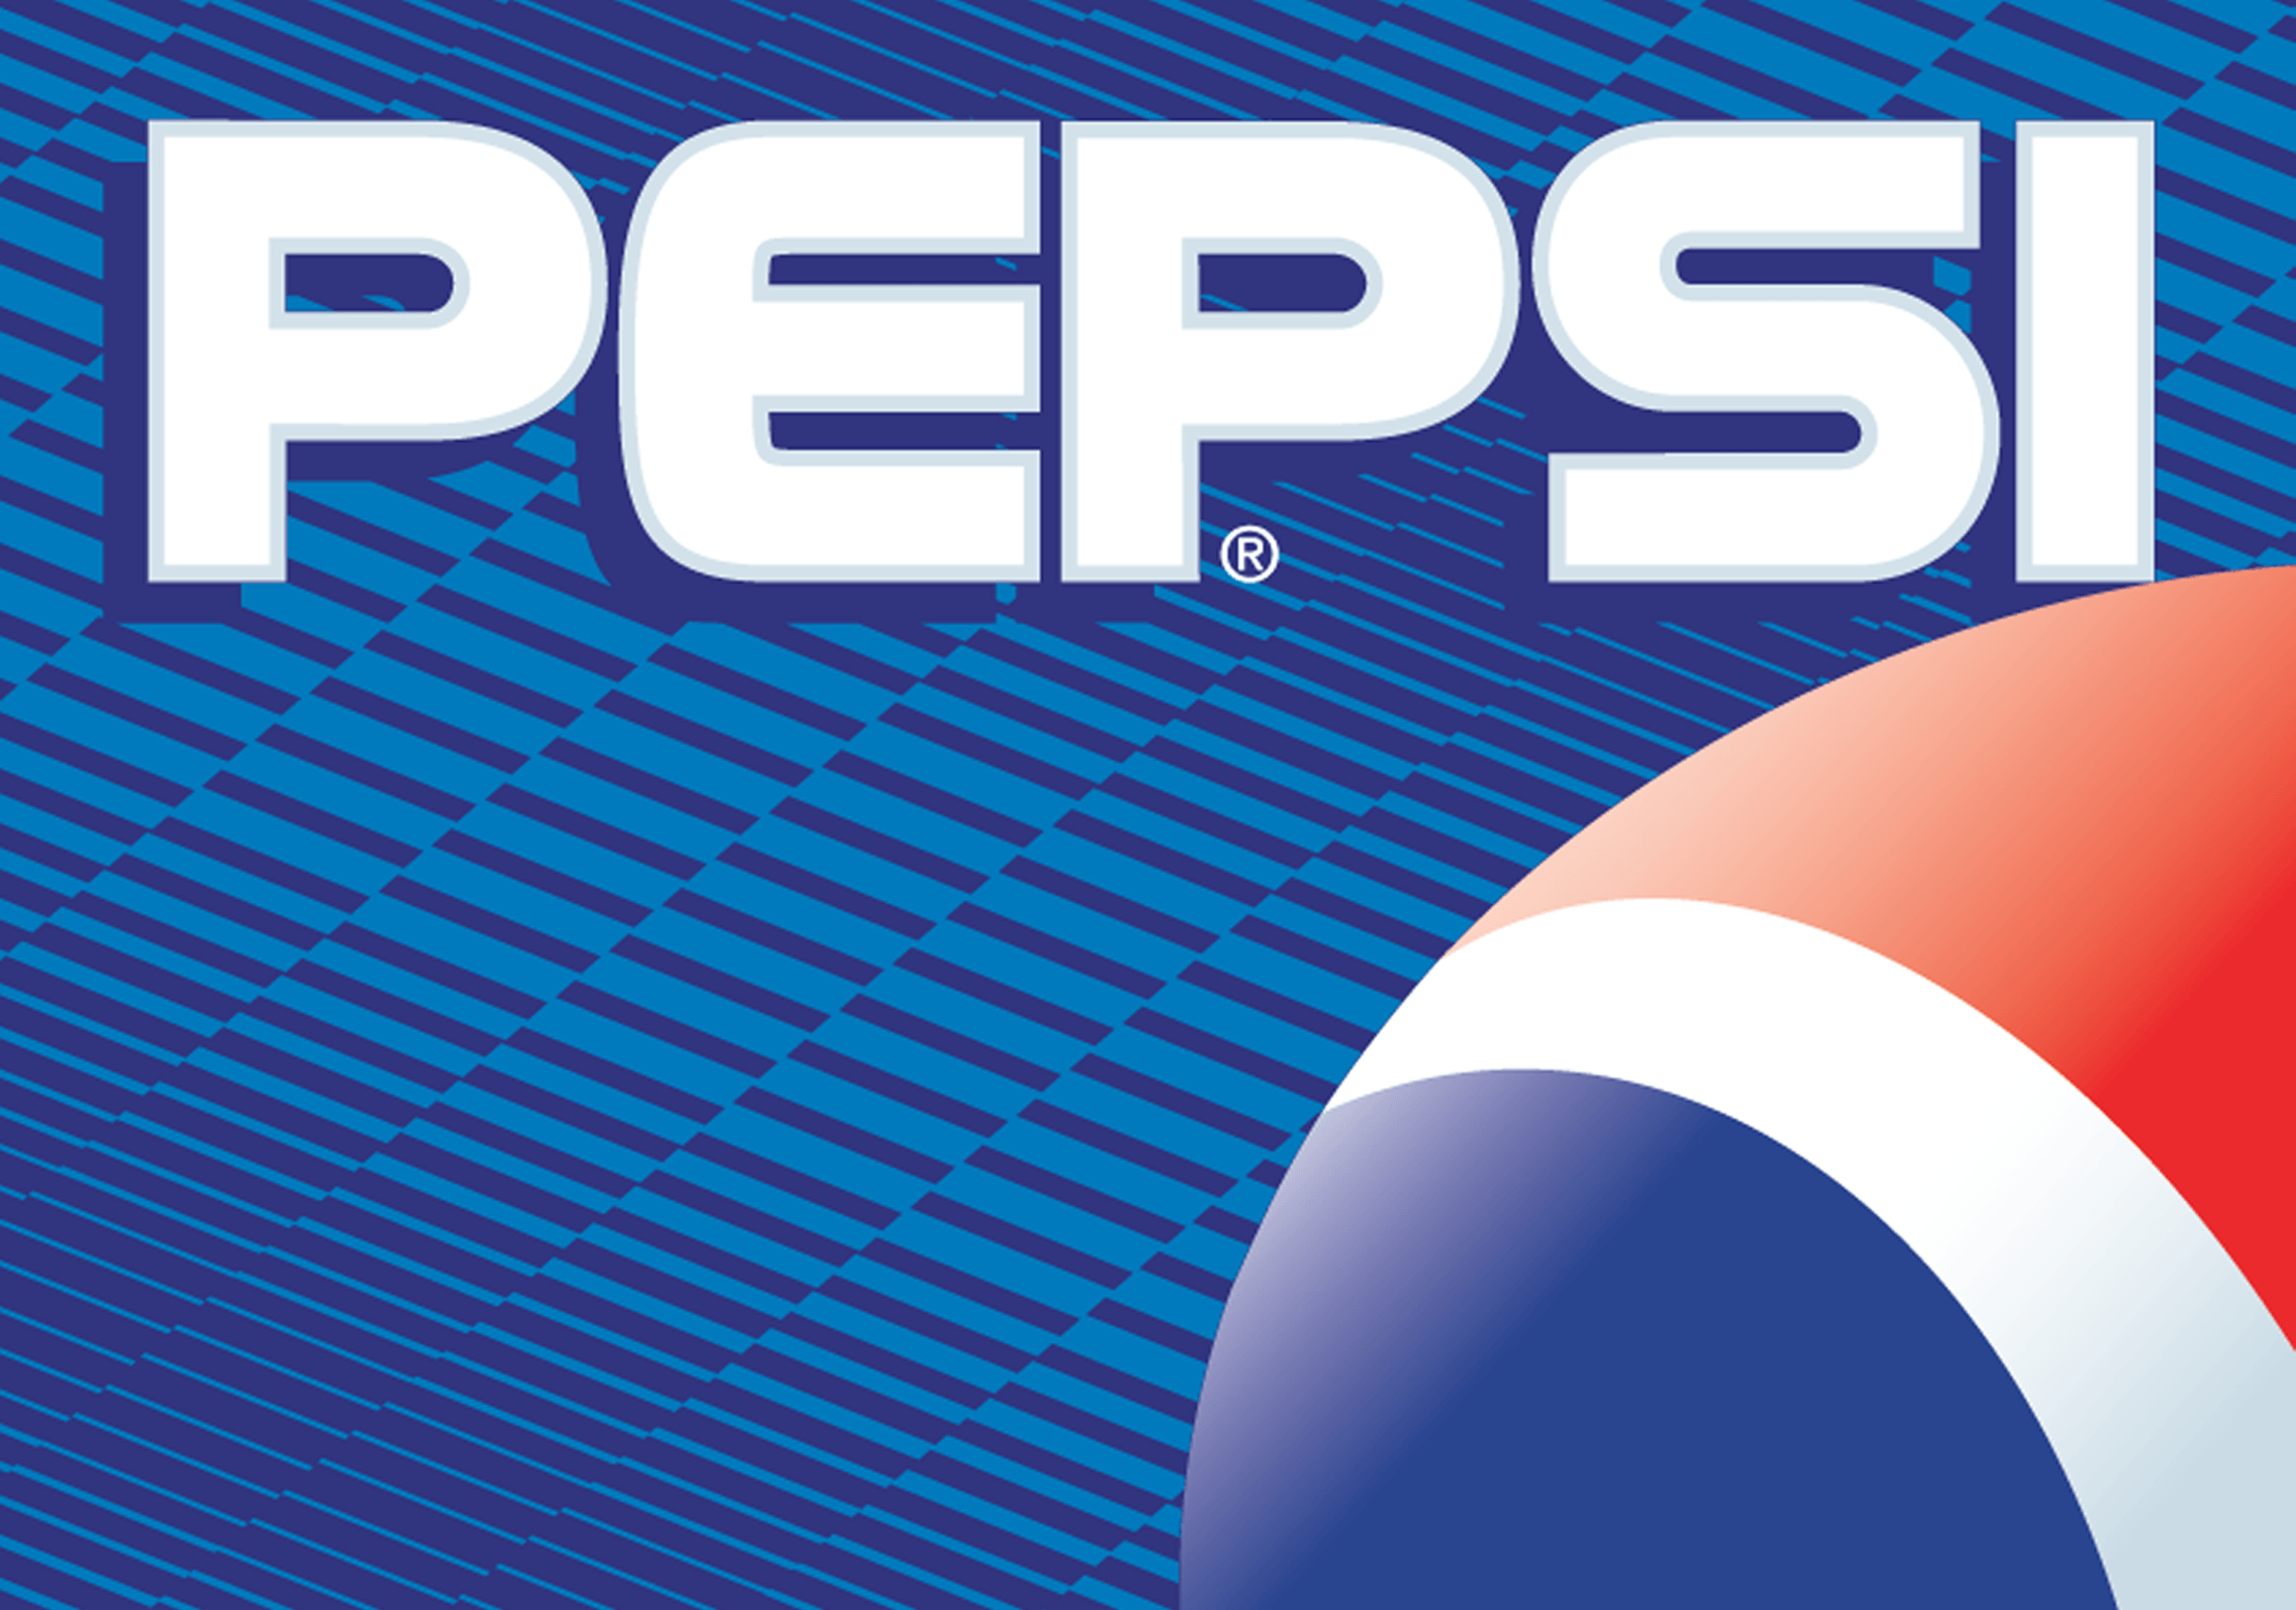 Pepsi Logo - Pepsi | Logopedia | FANDOM powered by Wikia